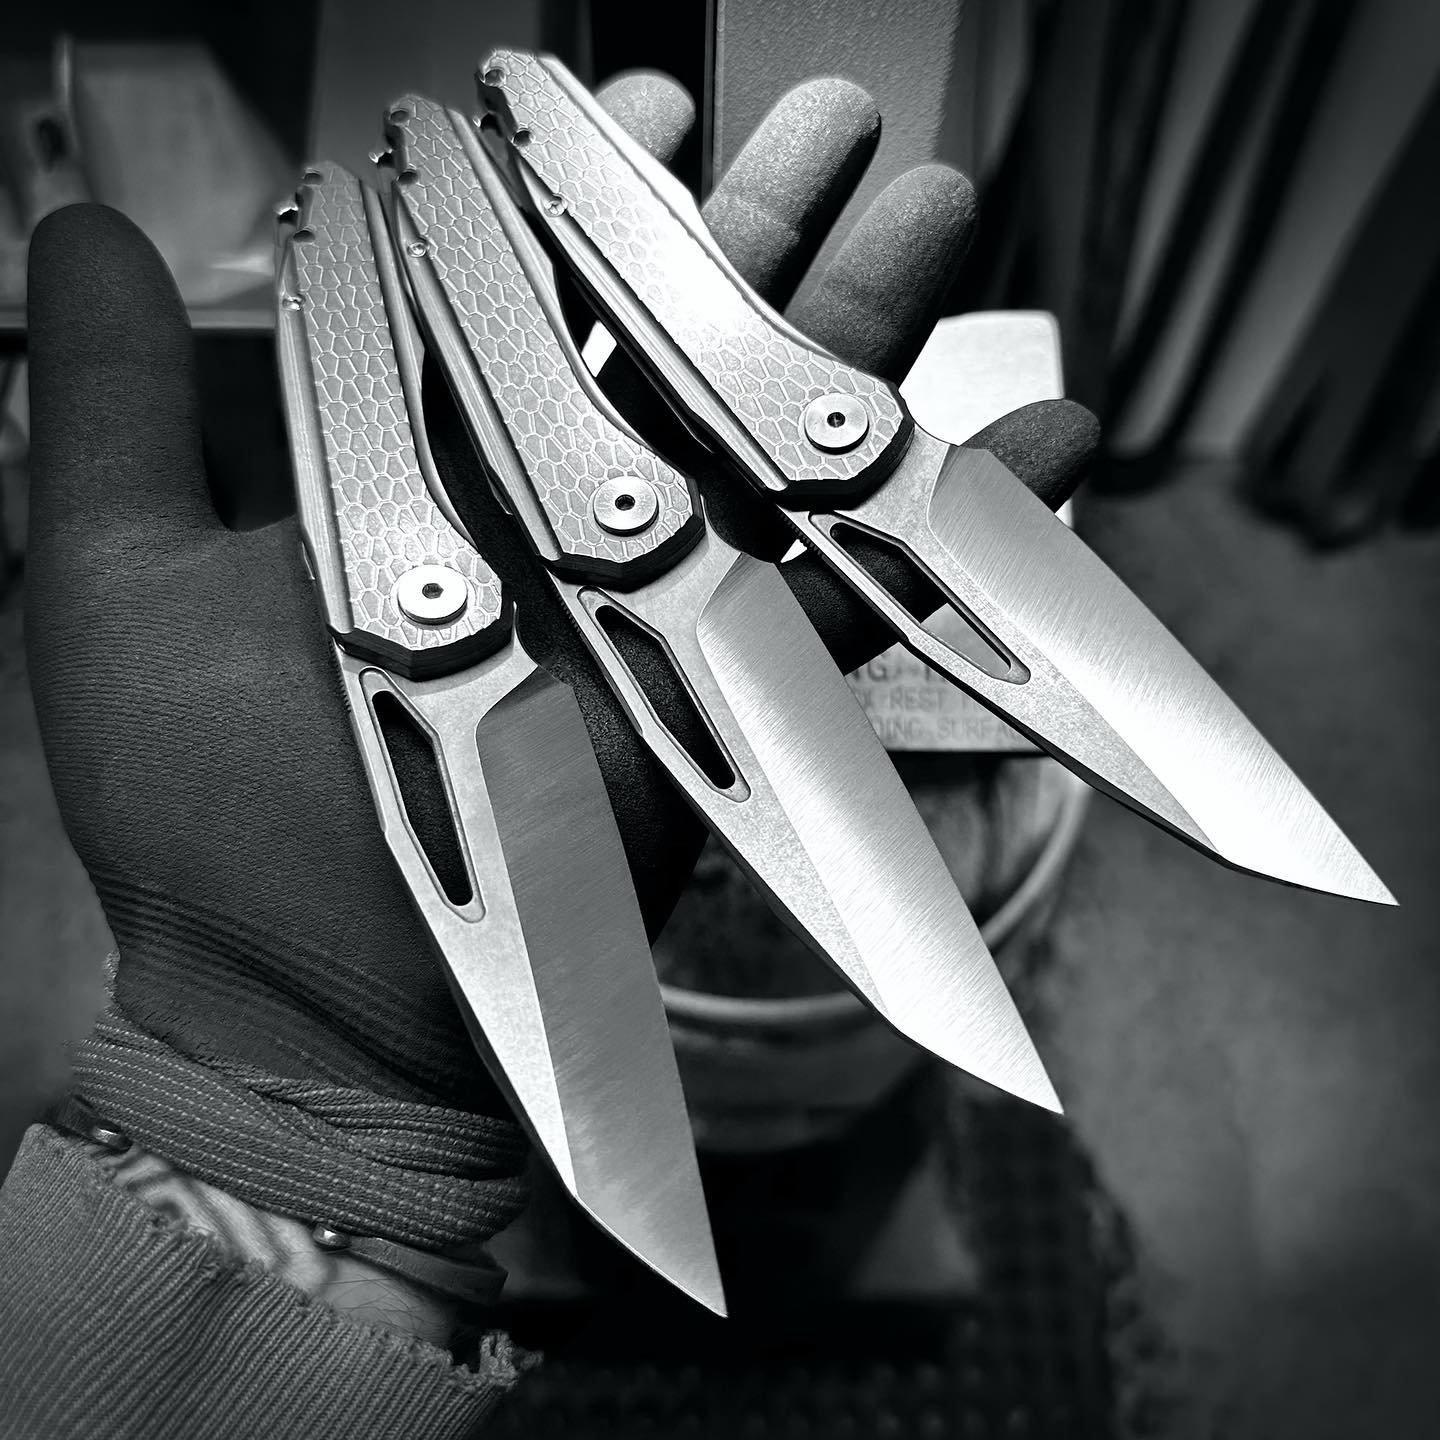 &times; fresh ground &times;
.
.
.
#munroeknives #munroemetalworks #munroemade #sigil #knives #customknives